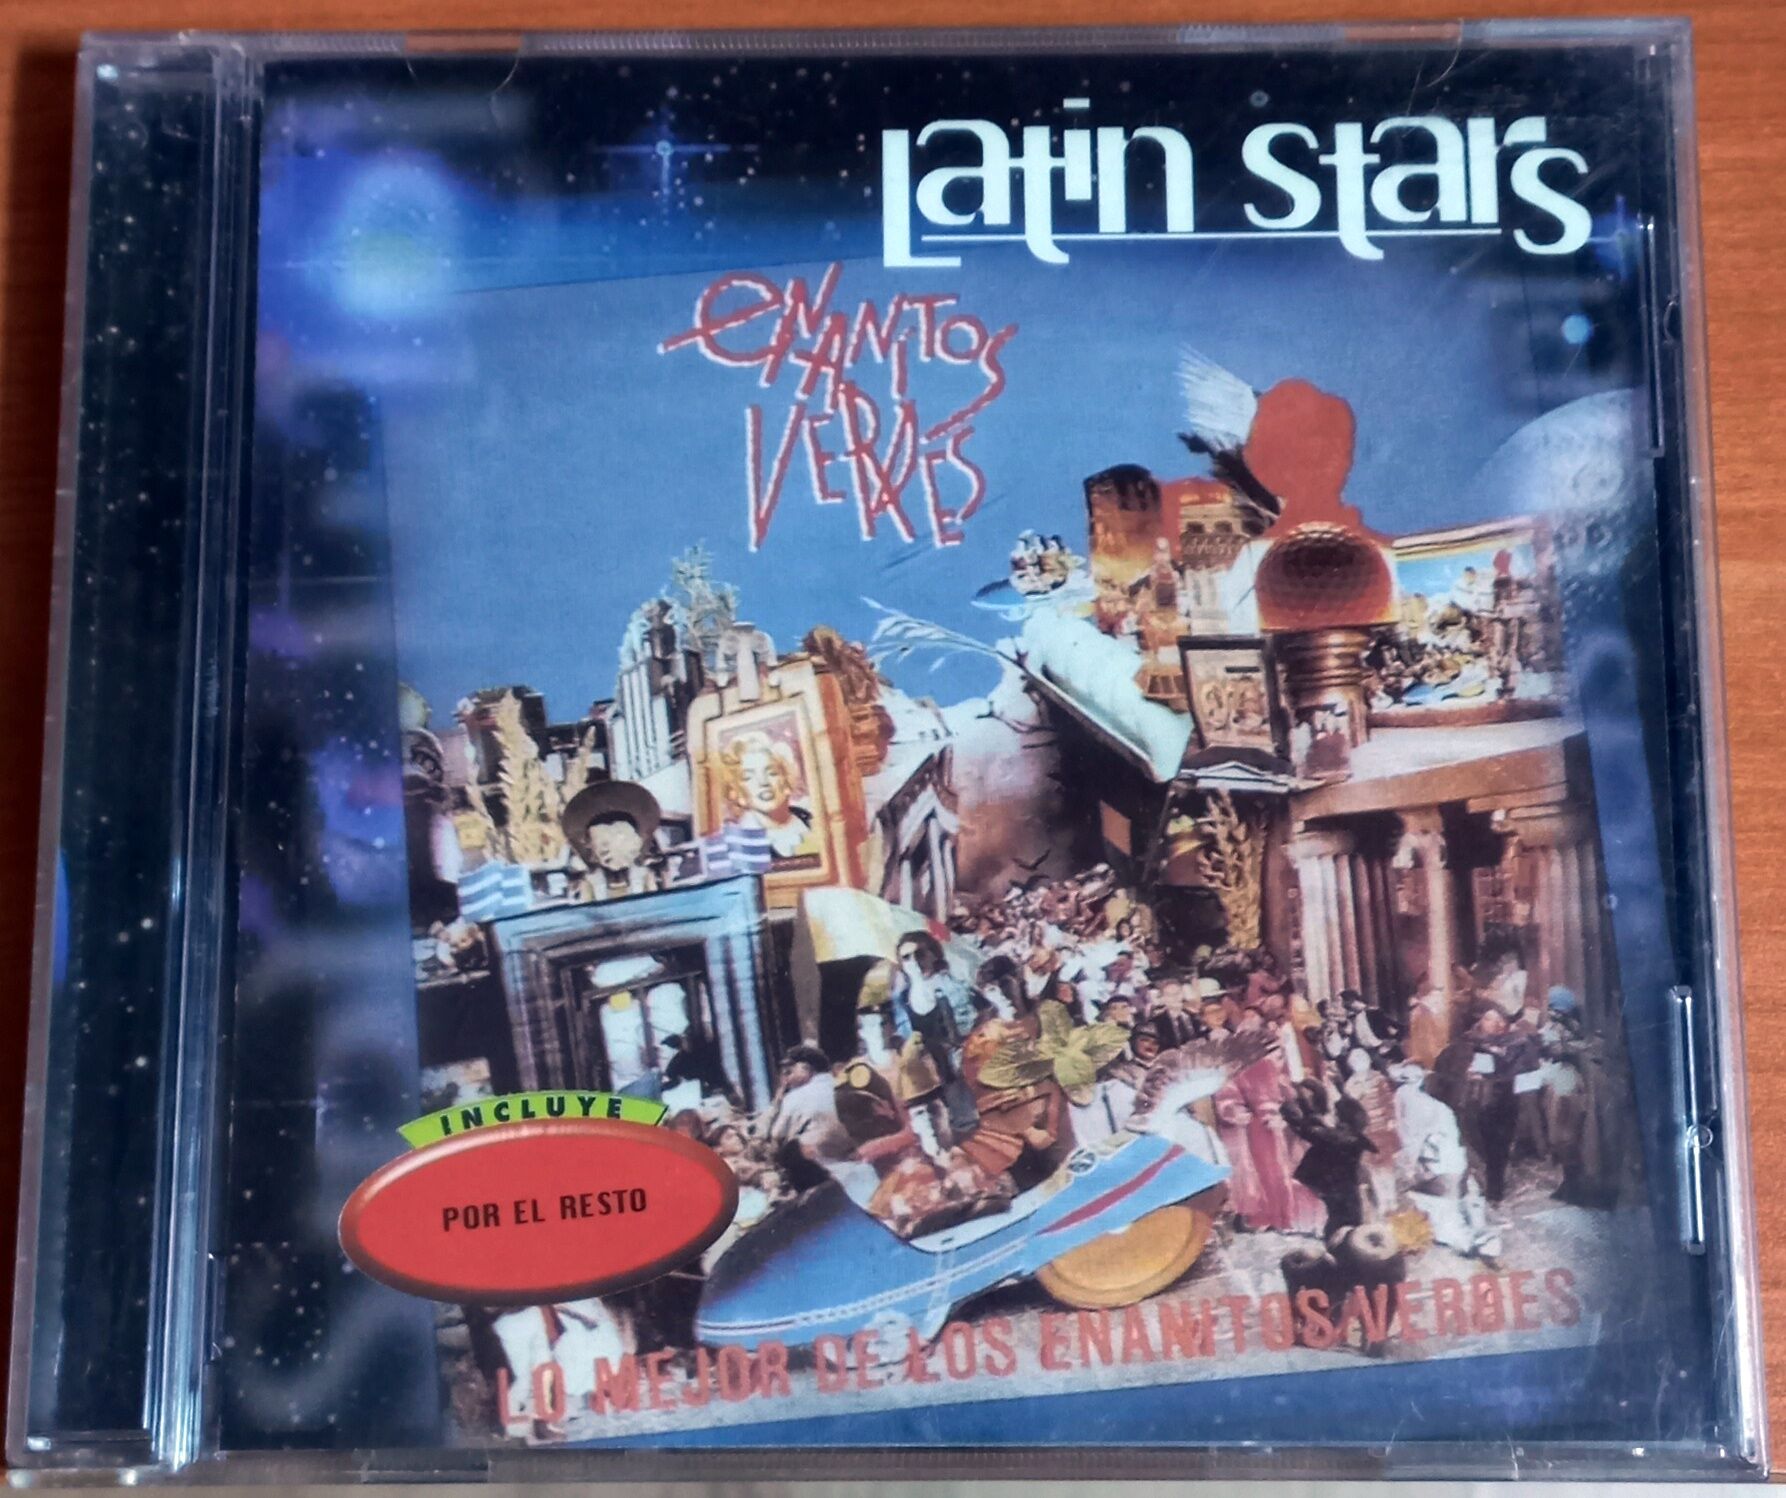 ENANITOS VERDES – LATIN STARS SERIES (1998) - CD 2.EL